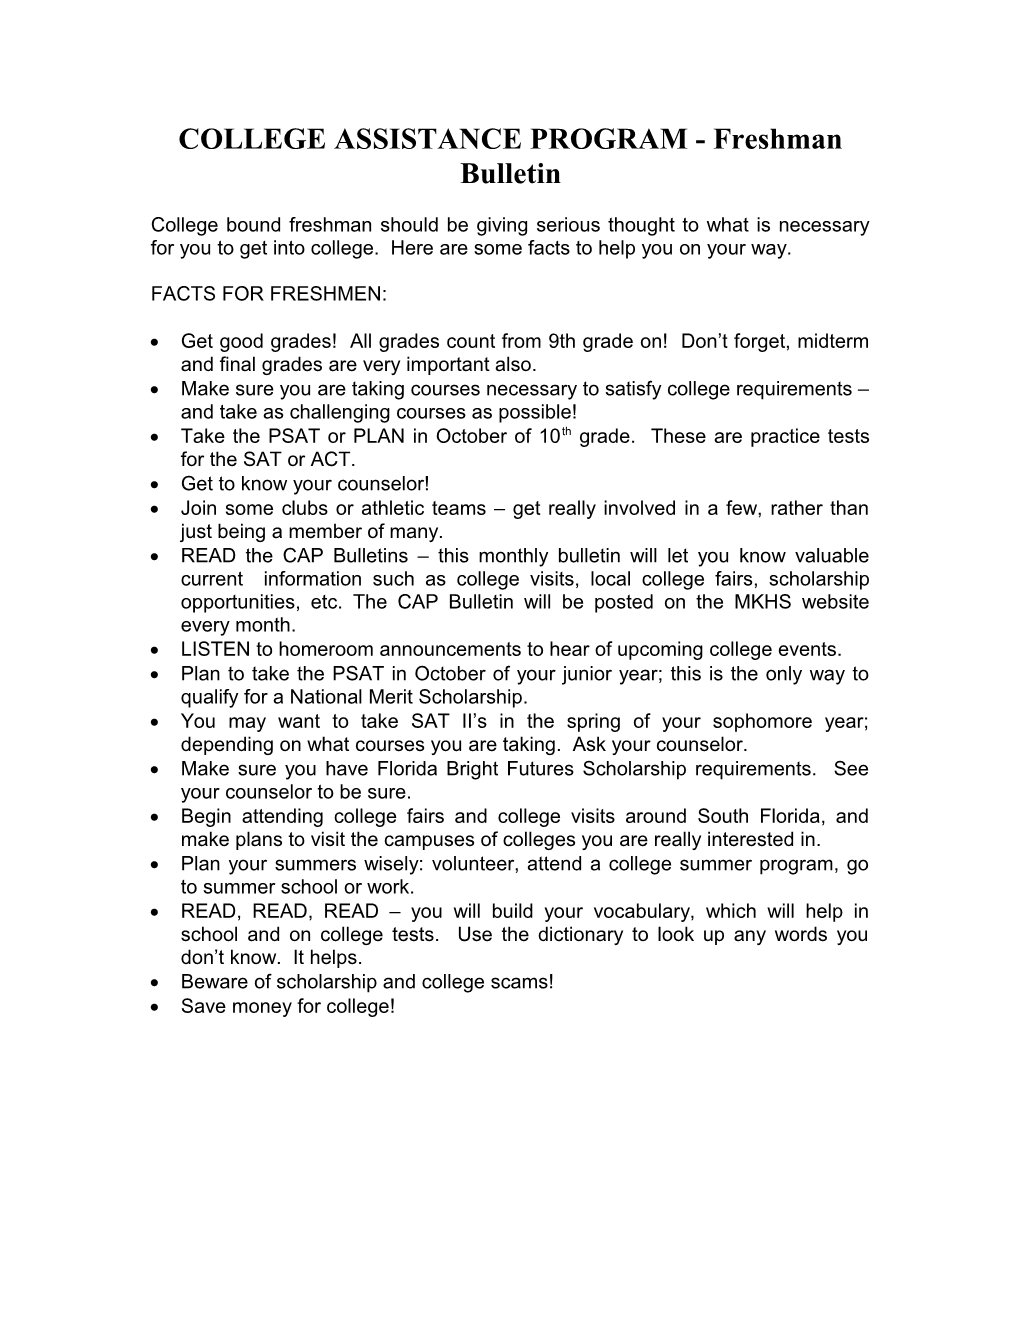 COLLEGE ASSISTANCE PROGRAM - Freshman Bulletin